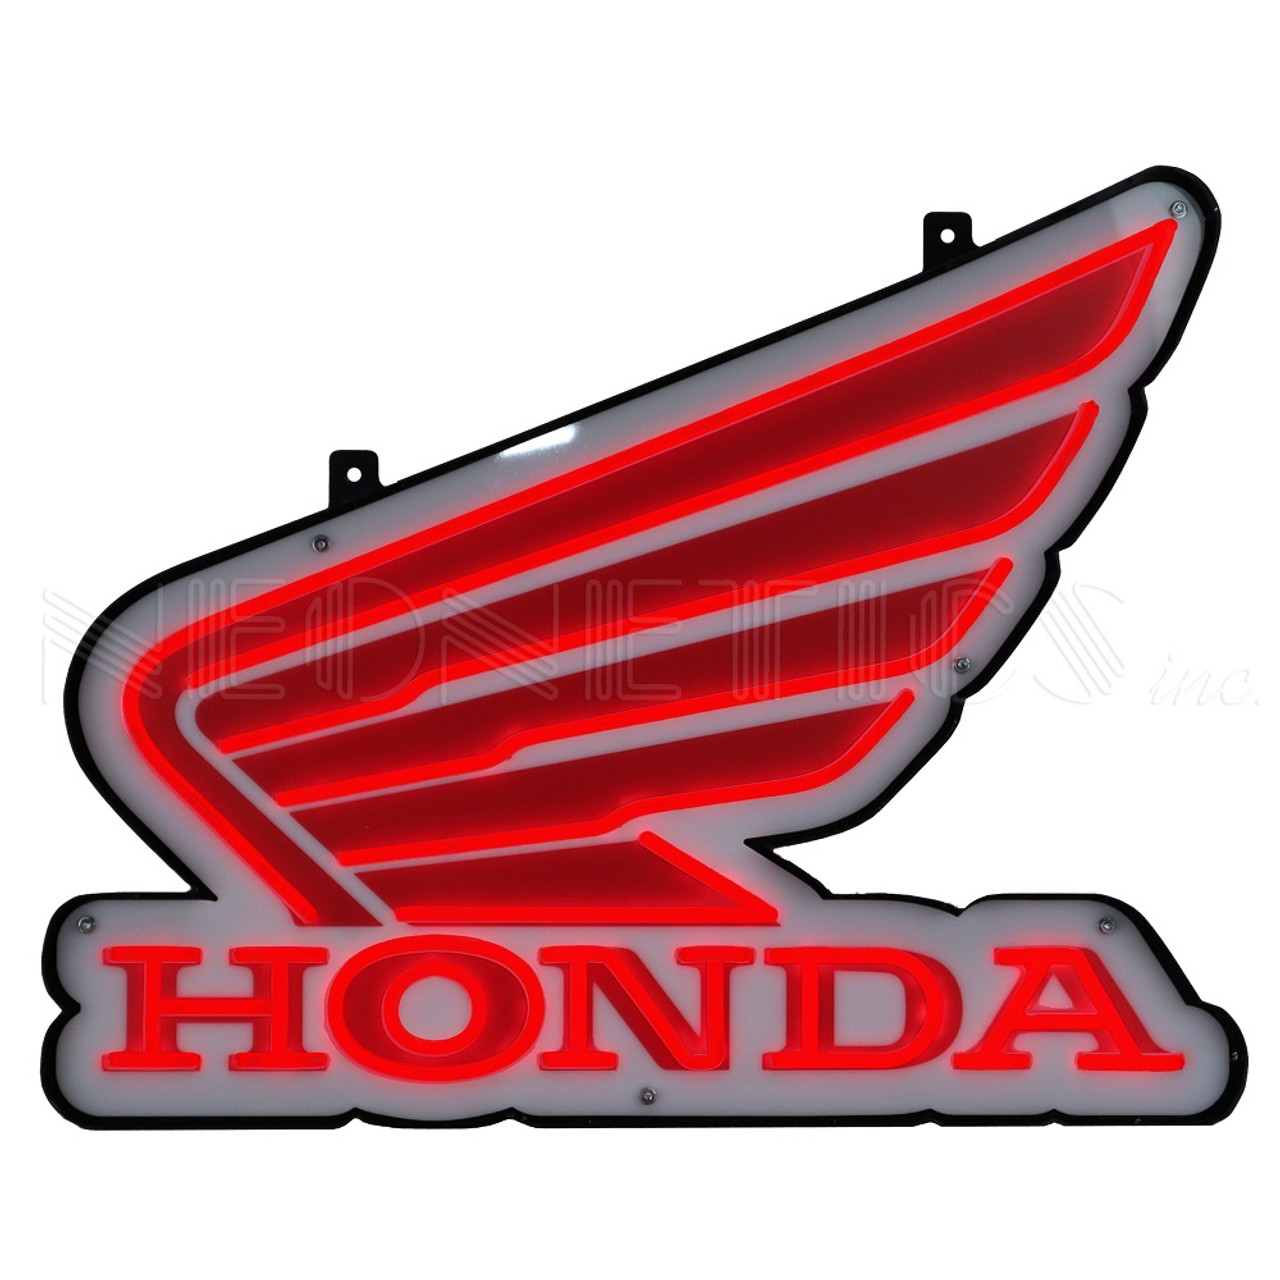 Honda LED Flex Neon Sign